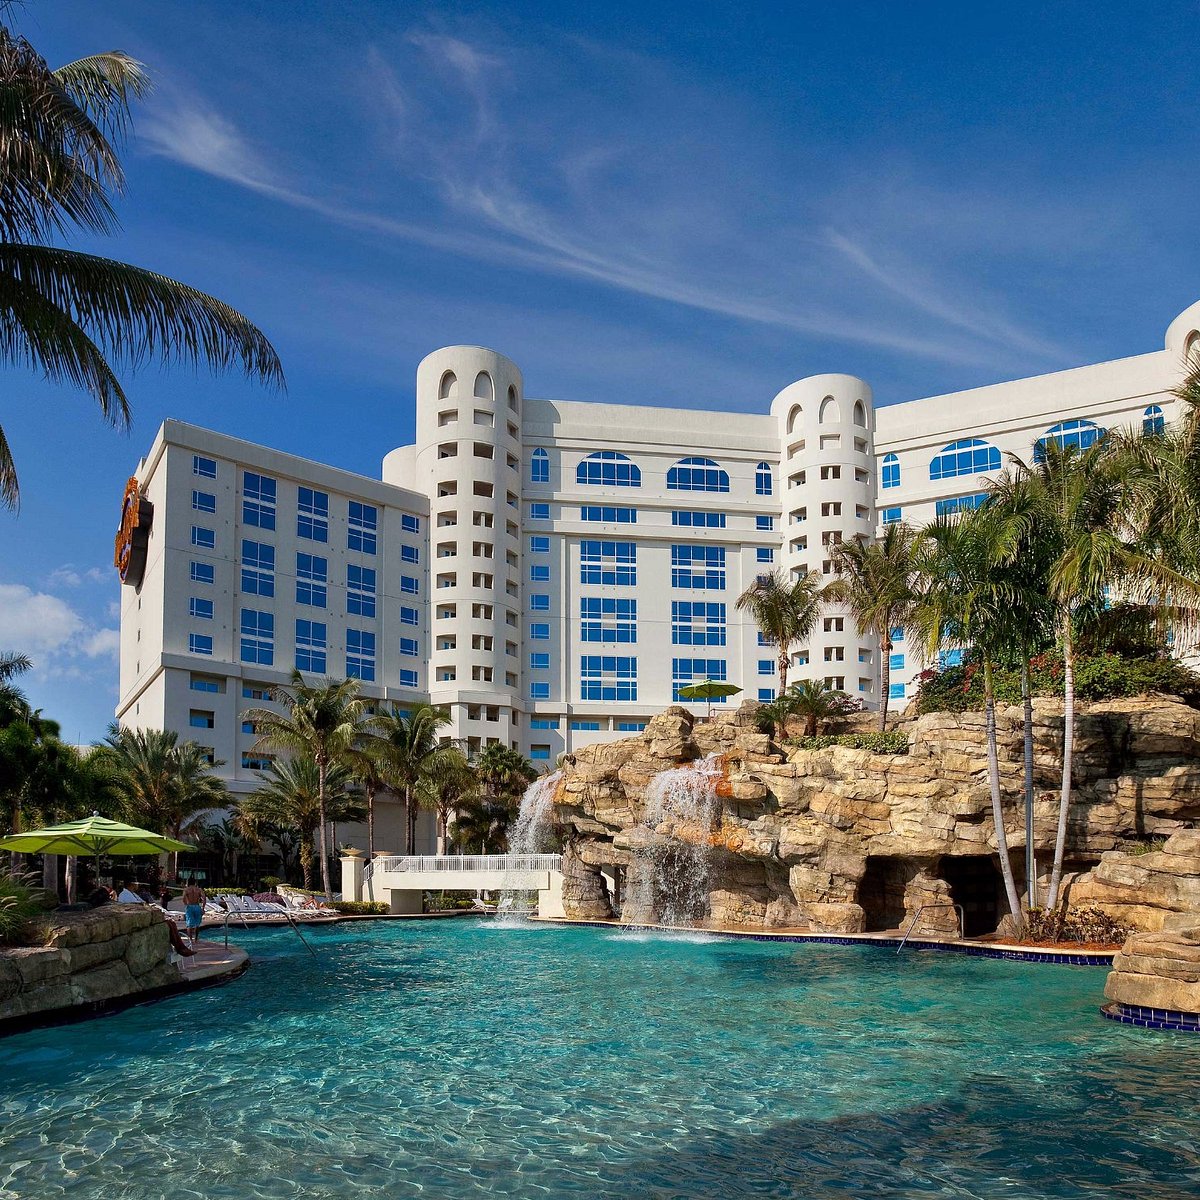 Top 98+ Images seminole hard rock hotel & casino hollywood photos Stunning